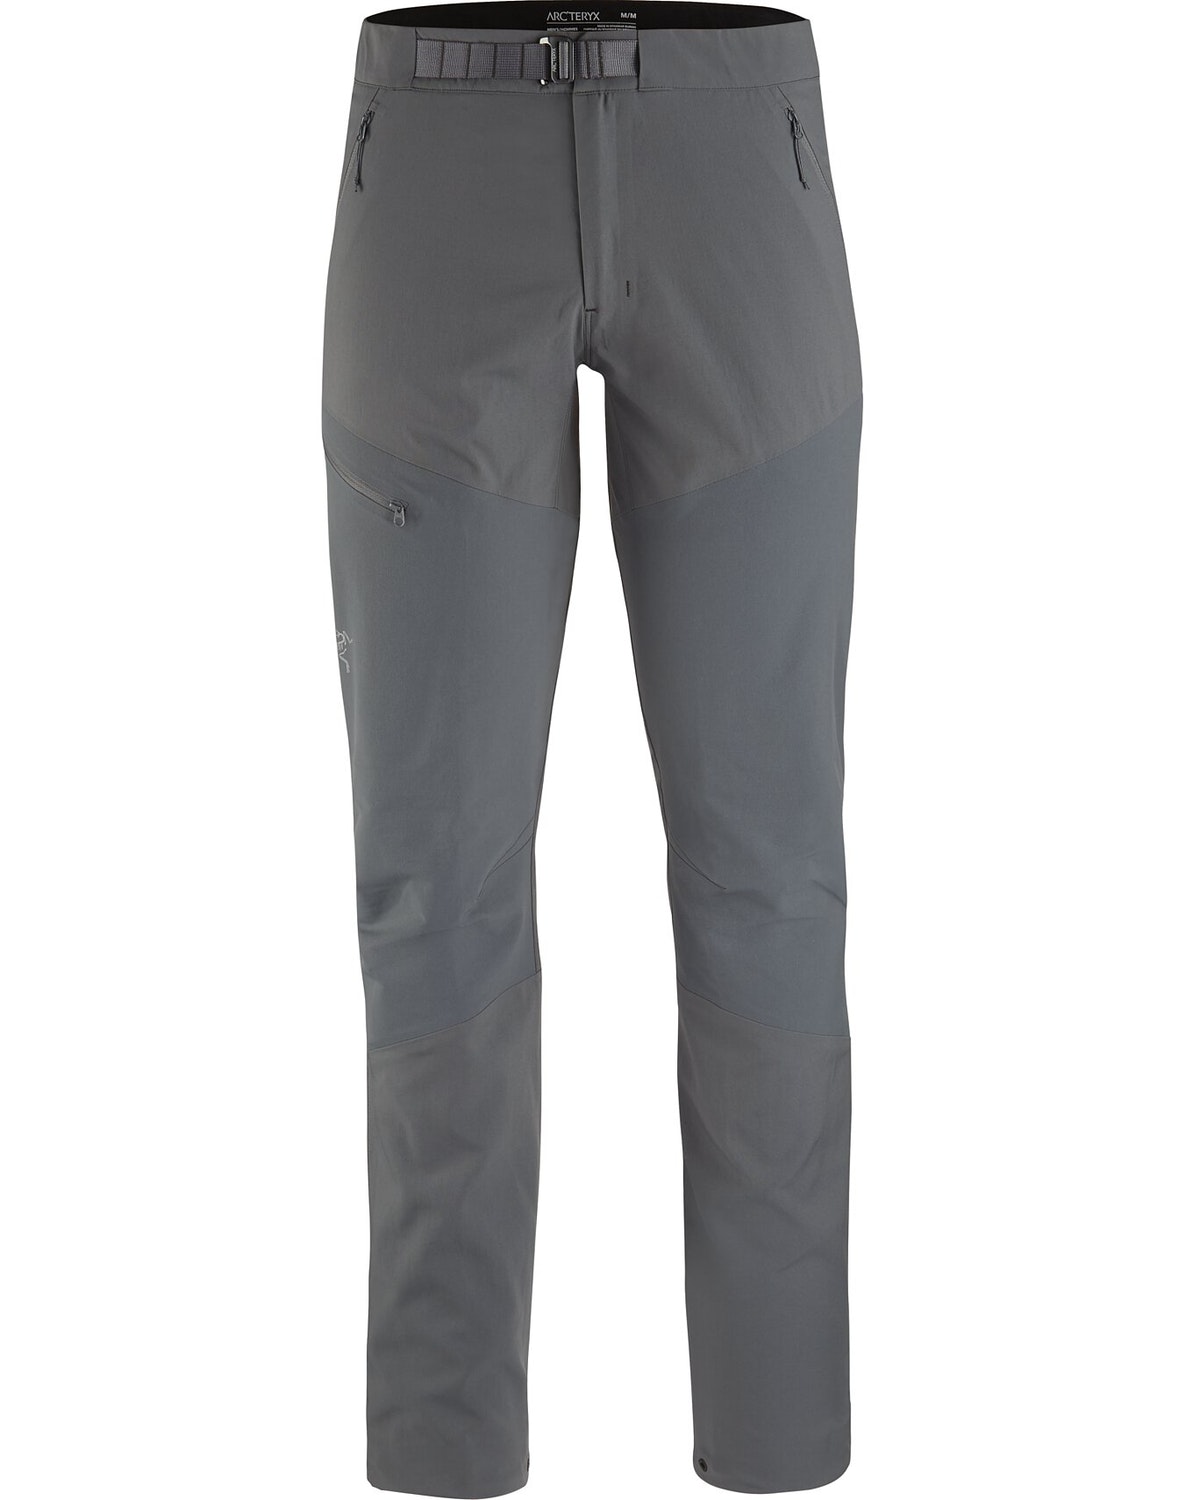 Pantaloni Da Arrampicata Arc'teryx Sigma FL Uomo Grigie - IT-541379